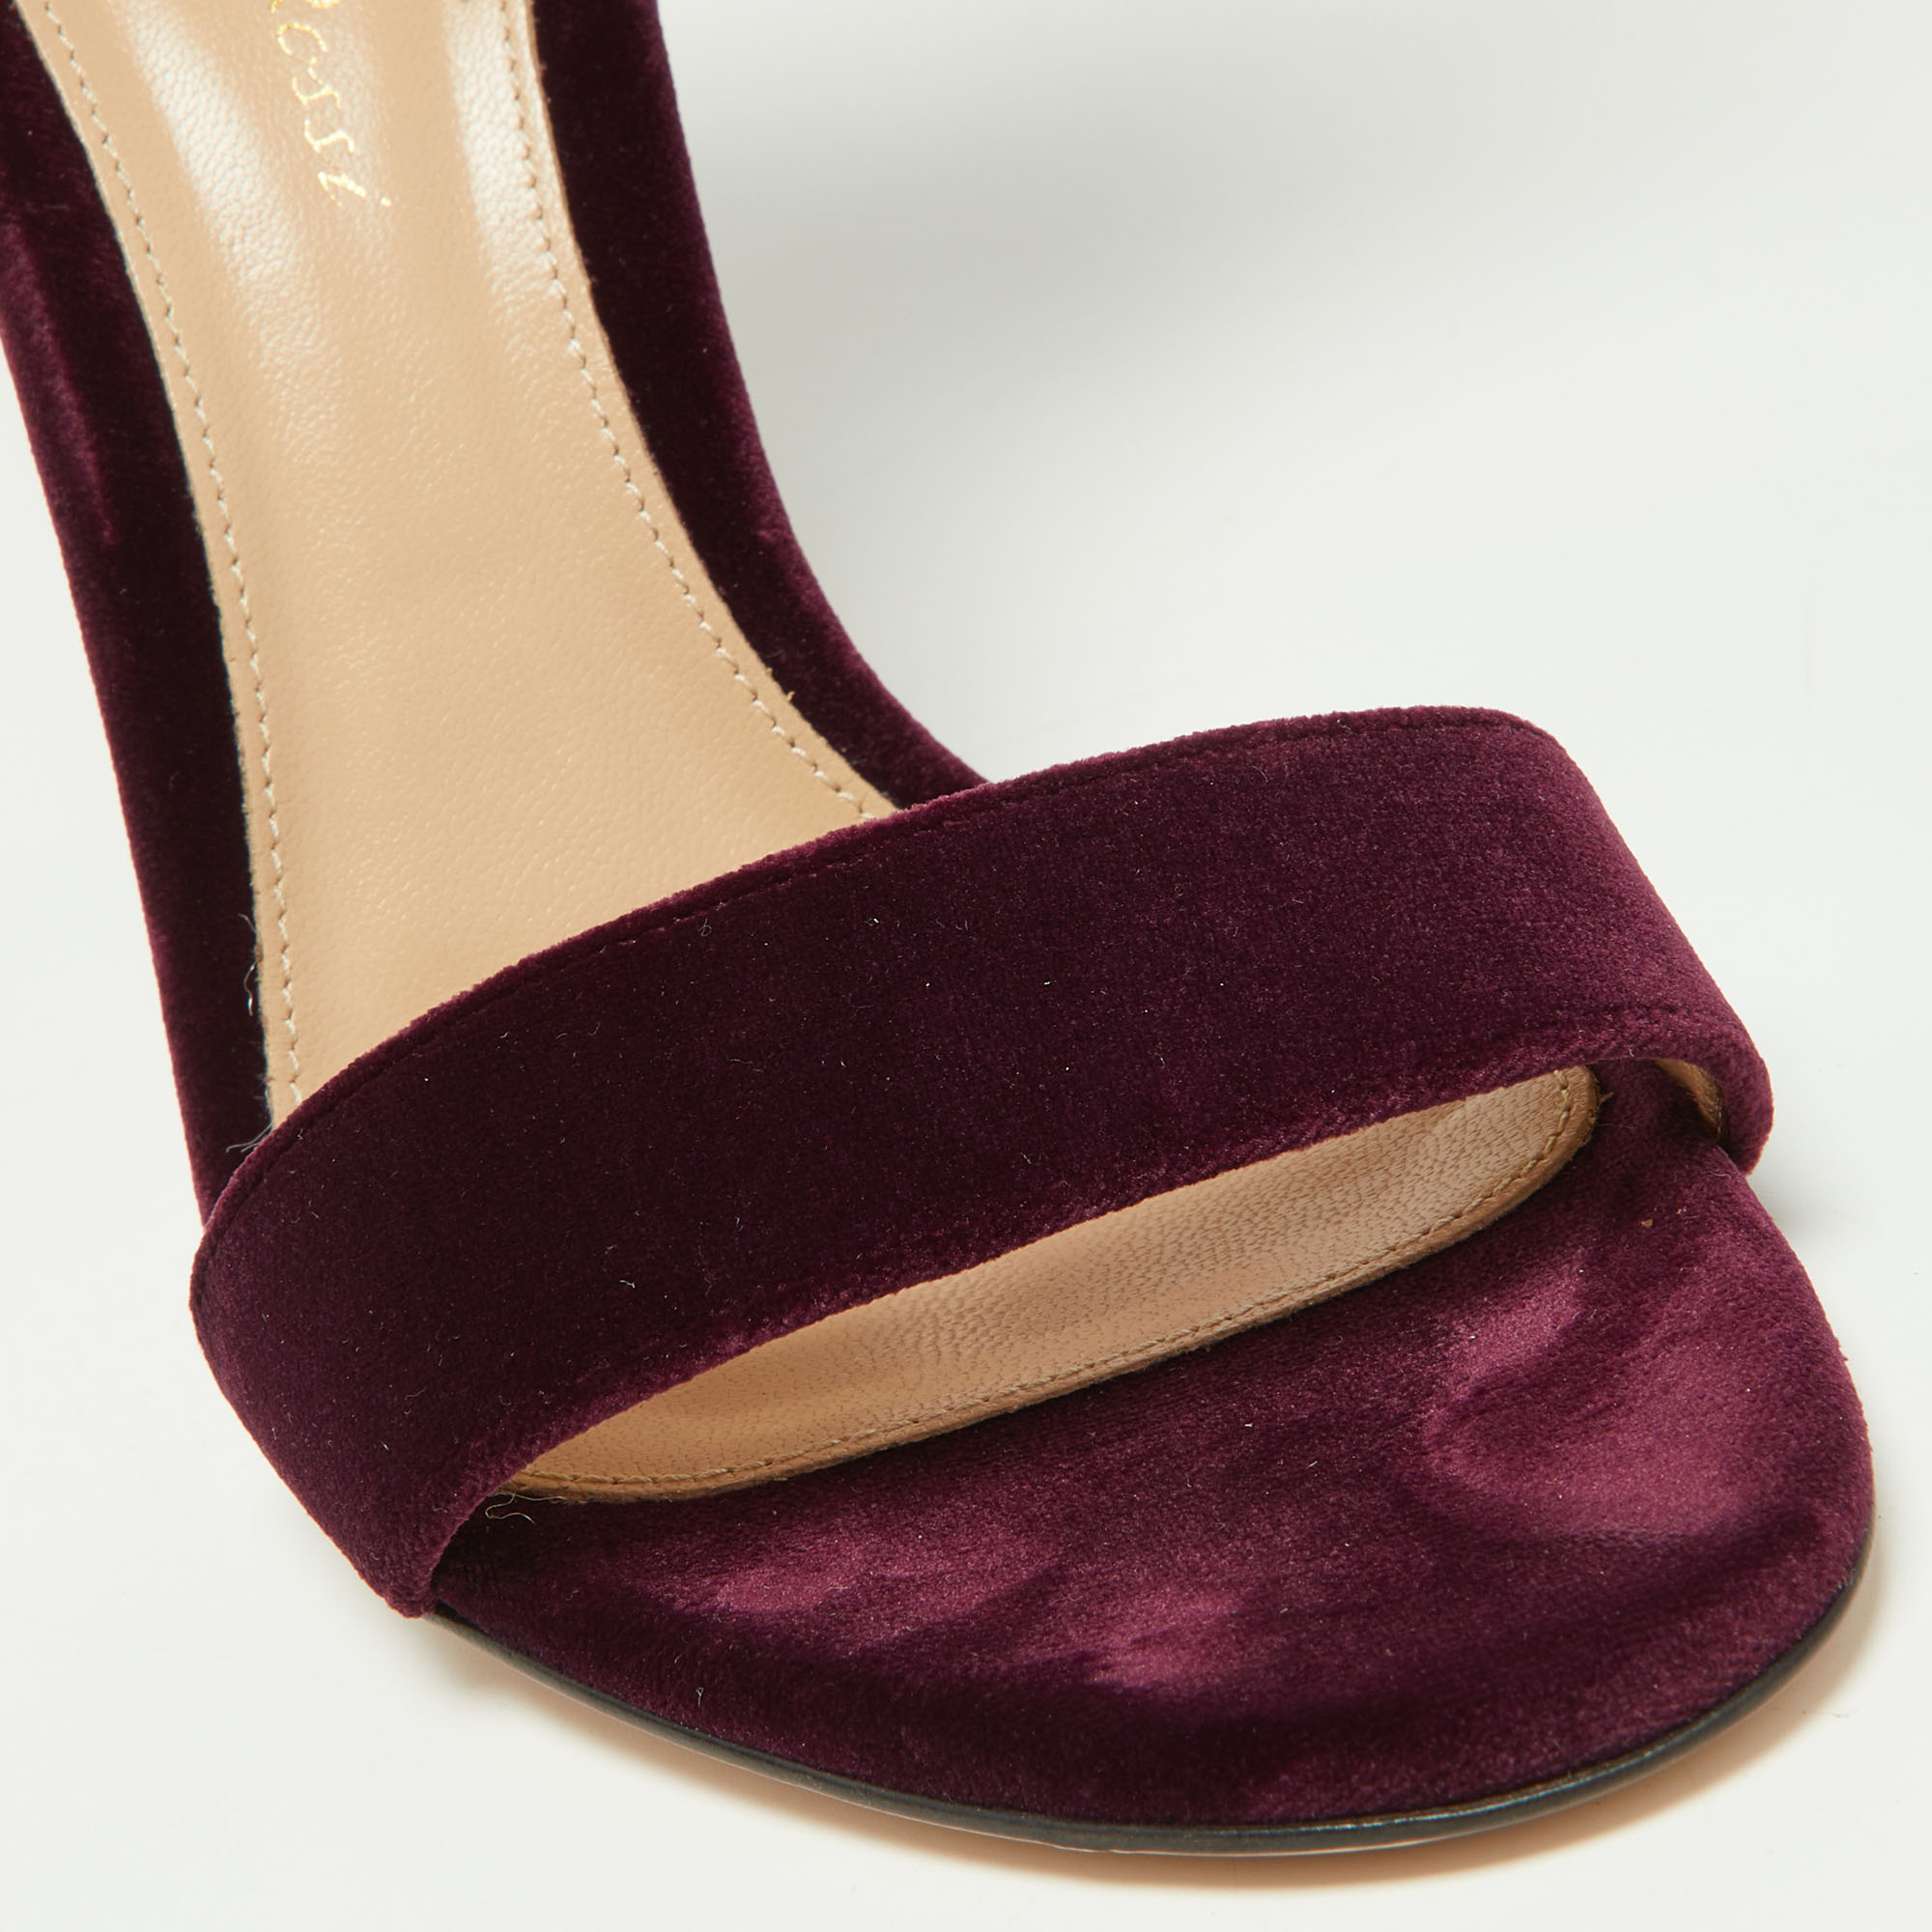 Gianvito Rossi Purple Velvet And Satin Gala Sandals Size 37